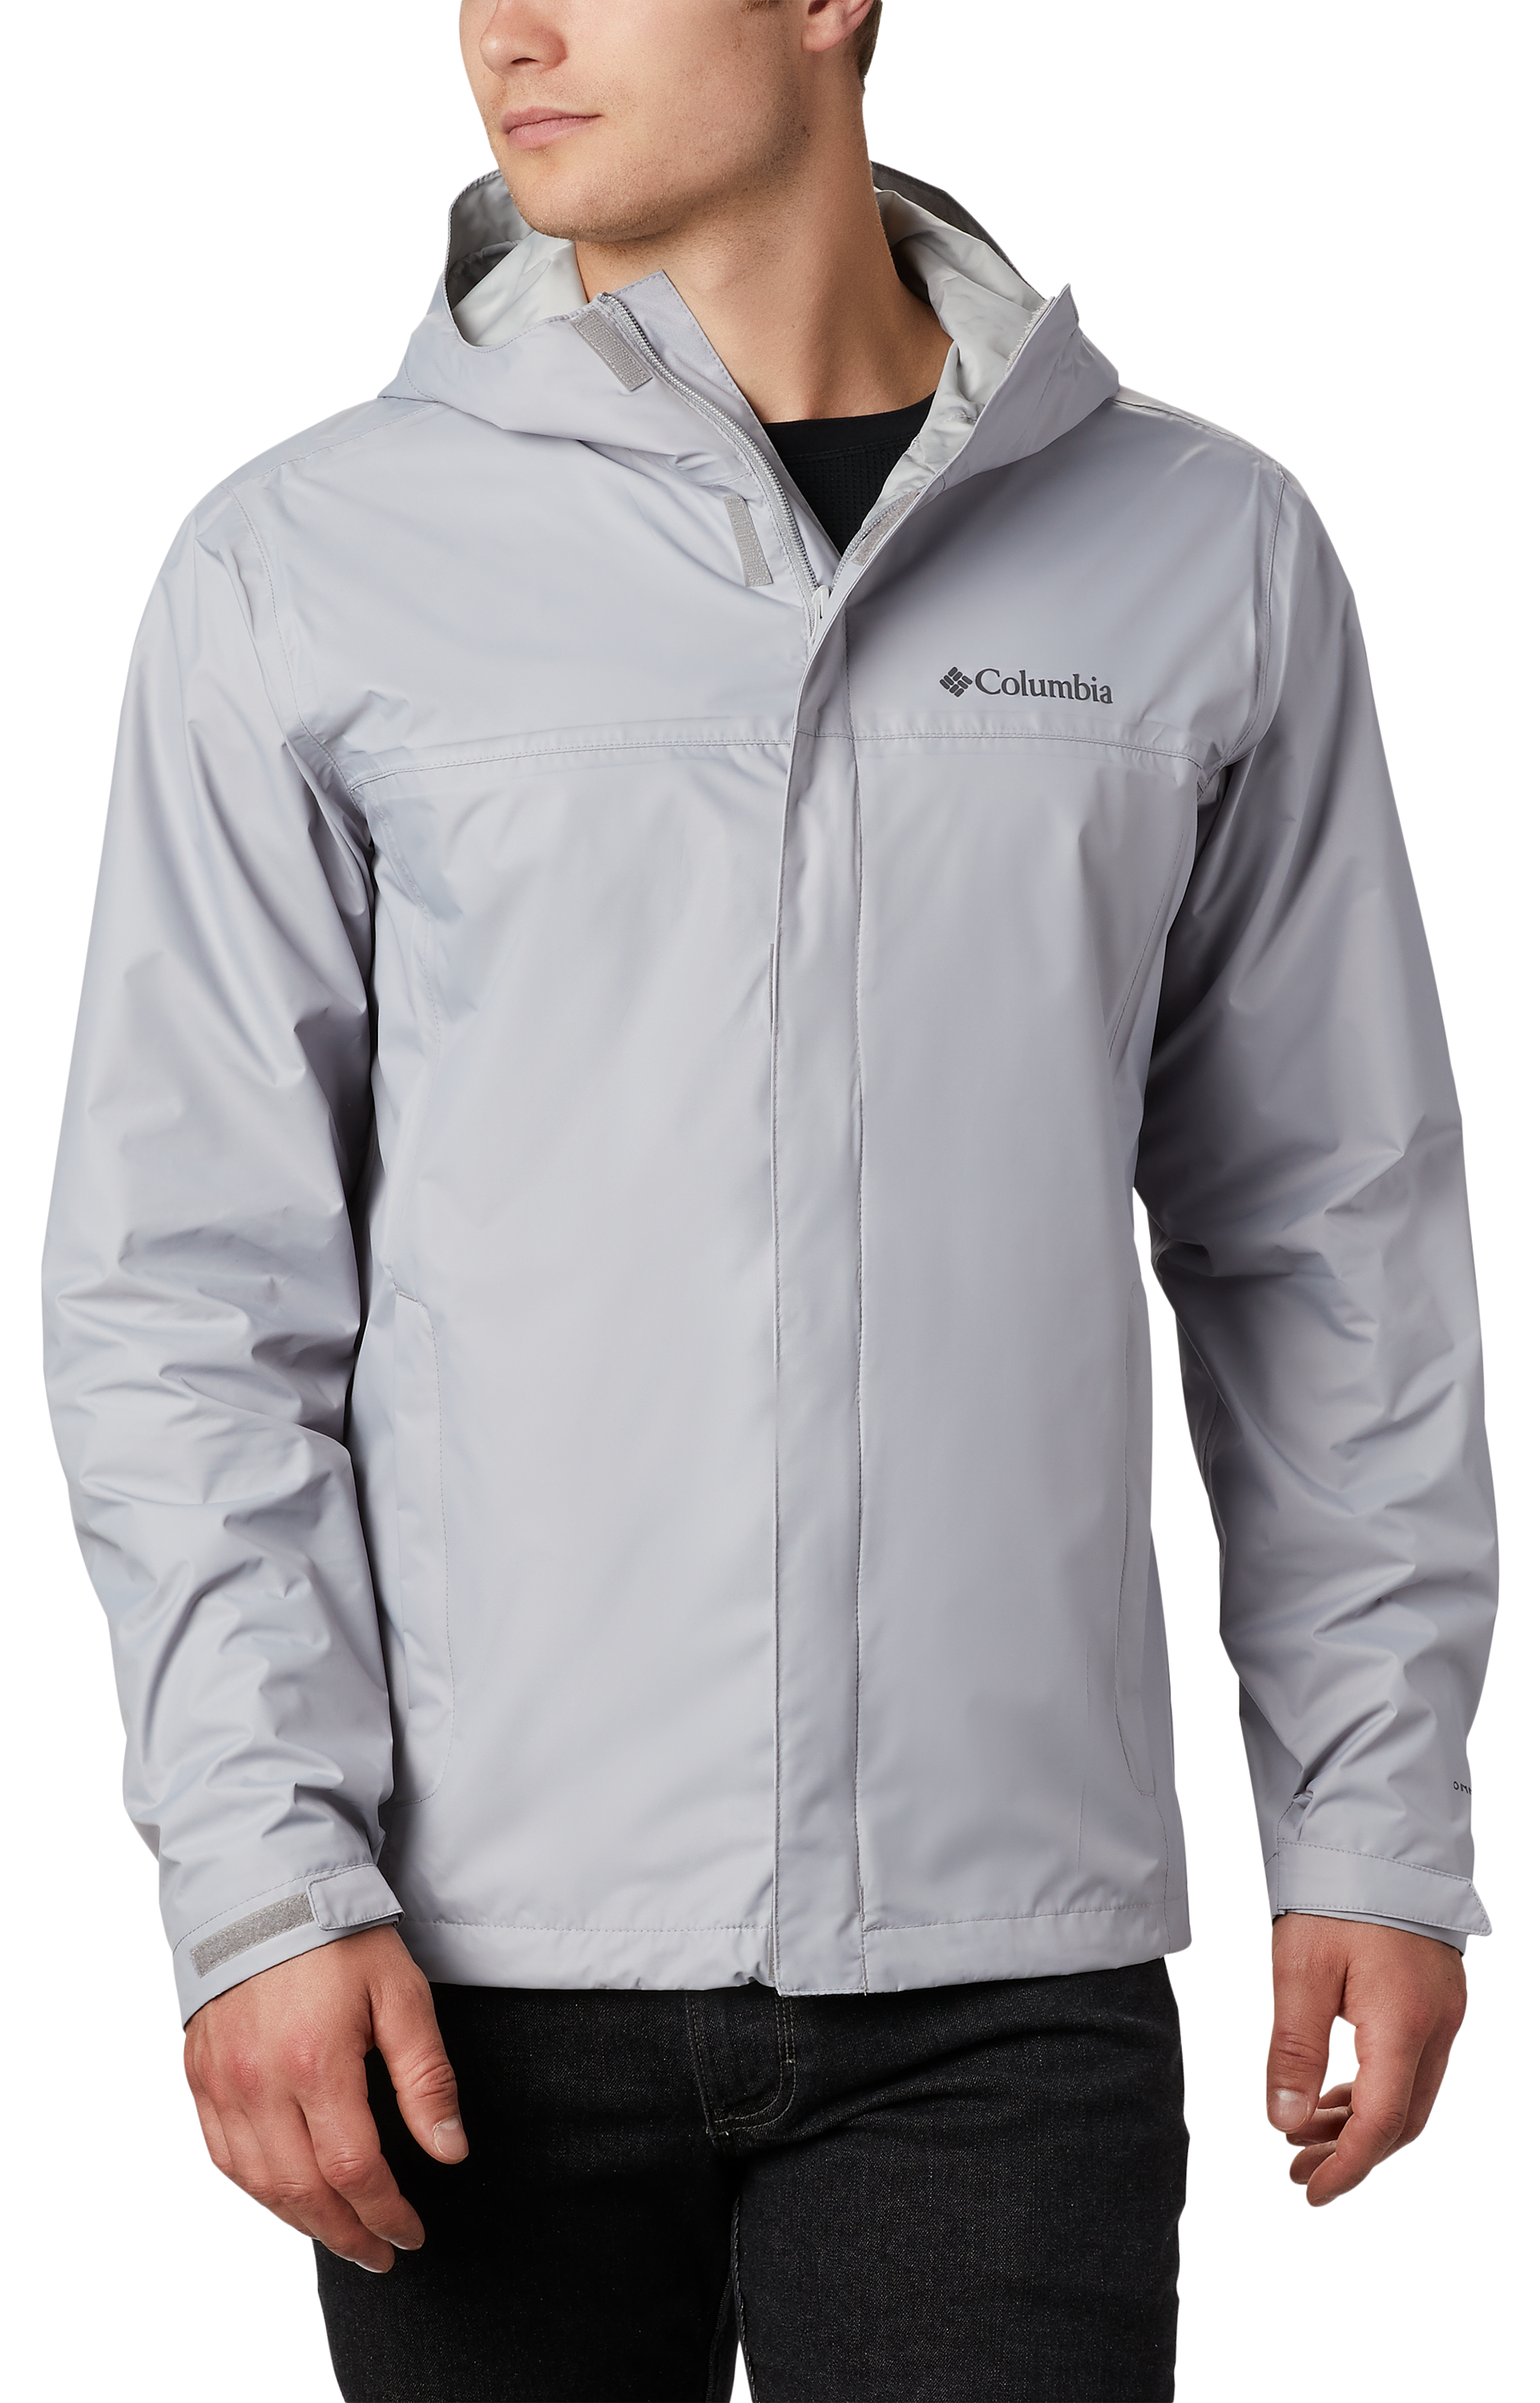 Columbia Watertight II Jacket for Men - Columbia Grey - S